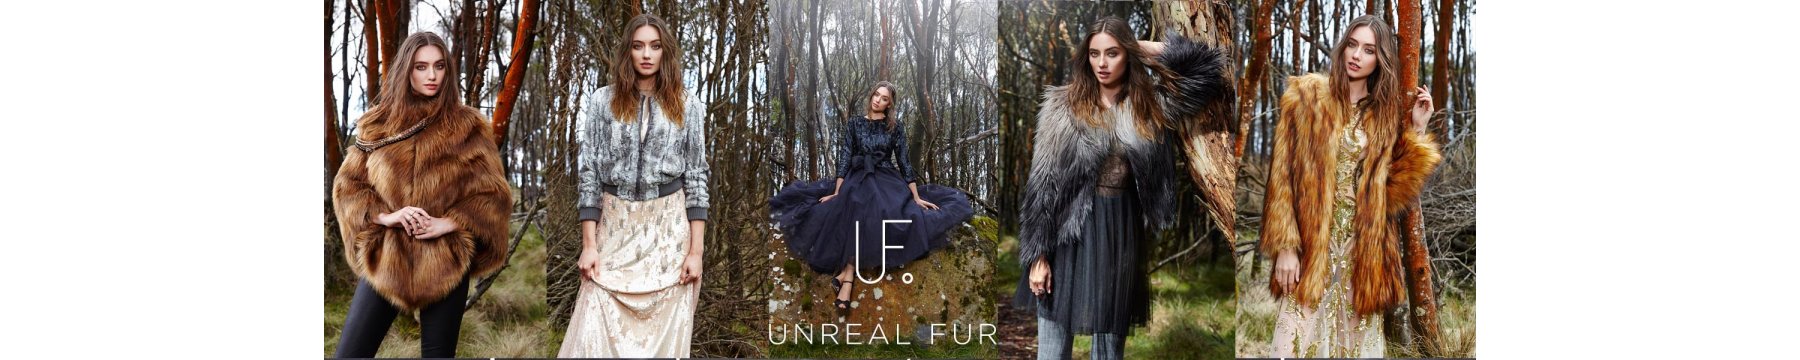 Unreal Fur | THE fake fur brand